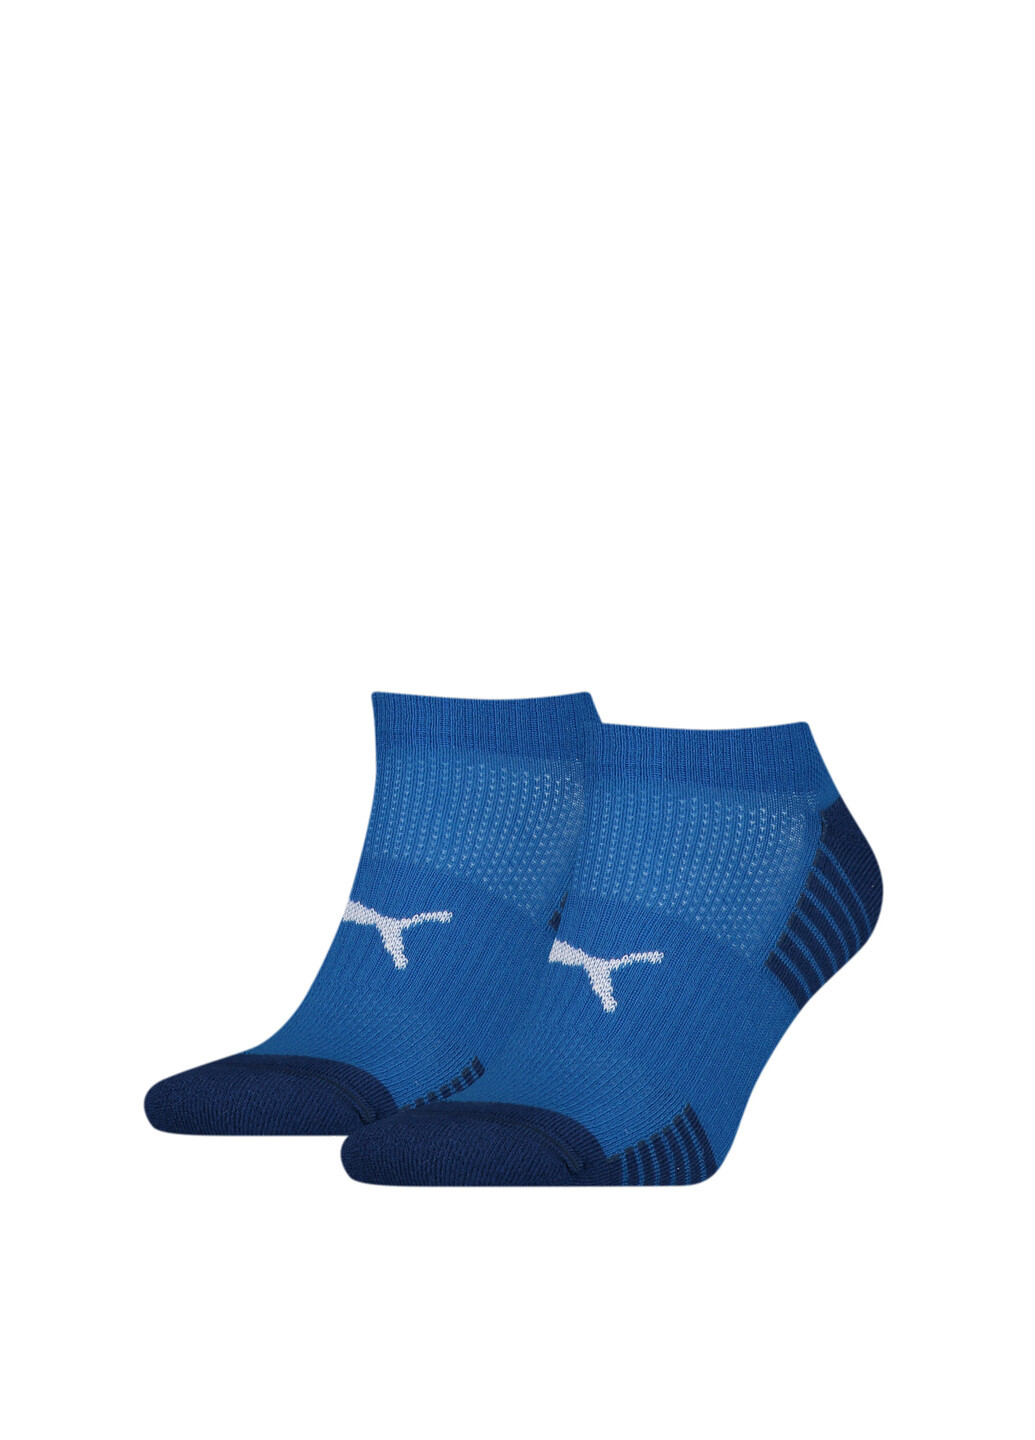 Носки Sport Cushioned Sneaker Socks 2 Pack Puma однотонные синие спортивные